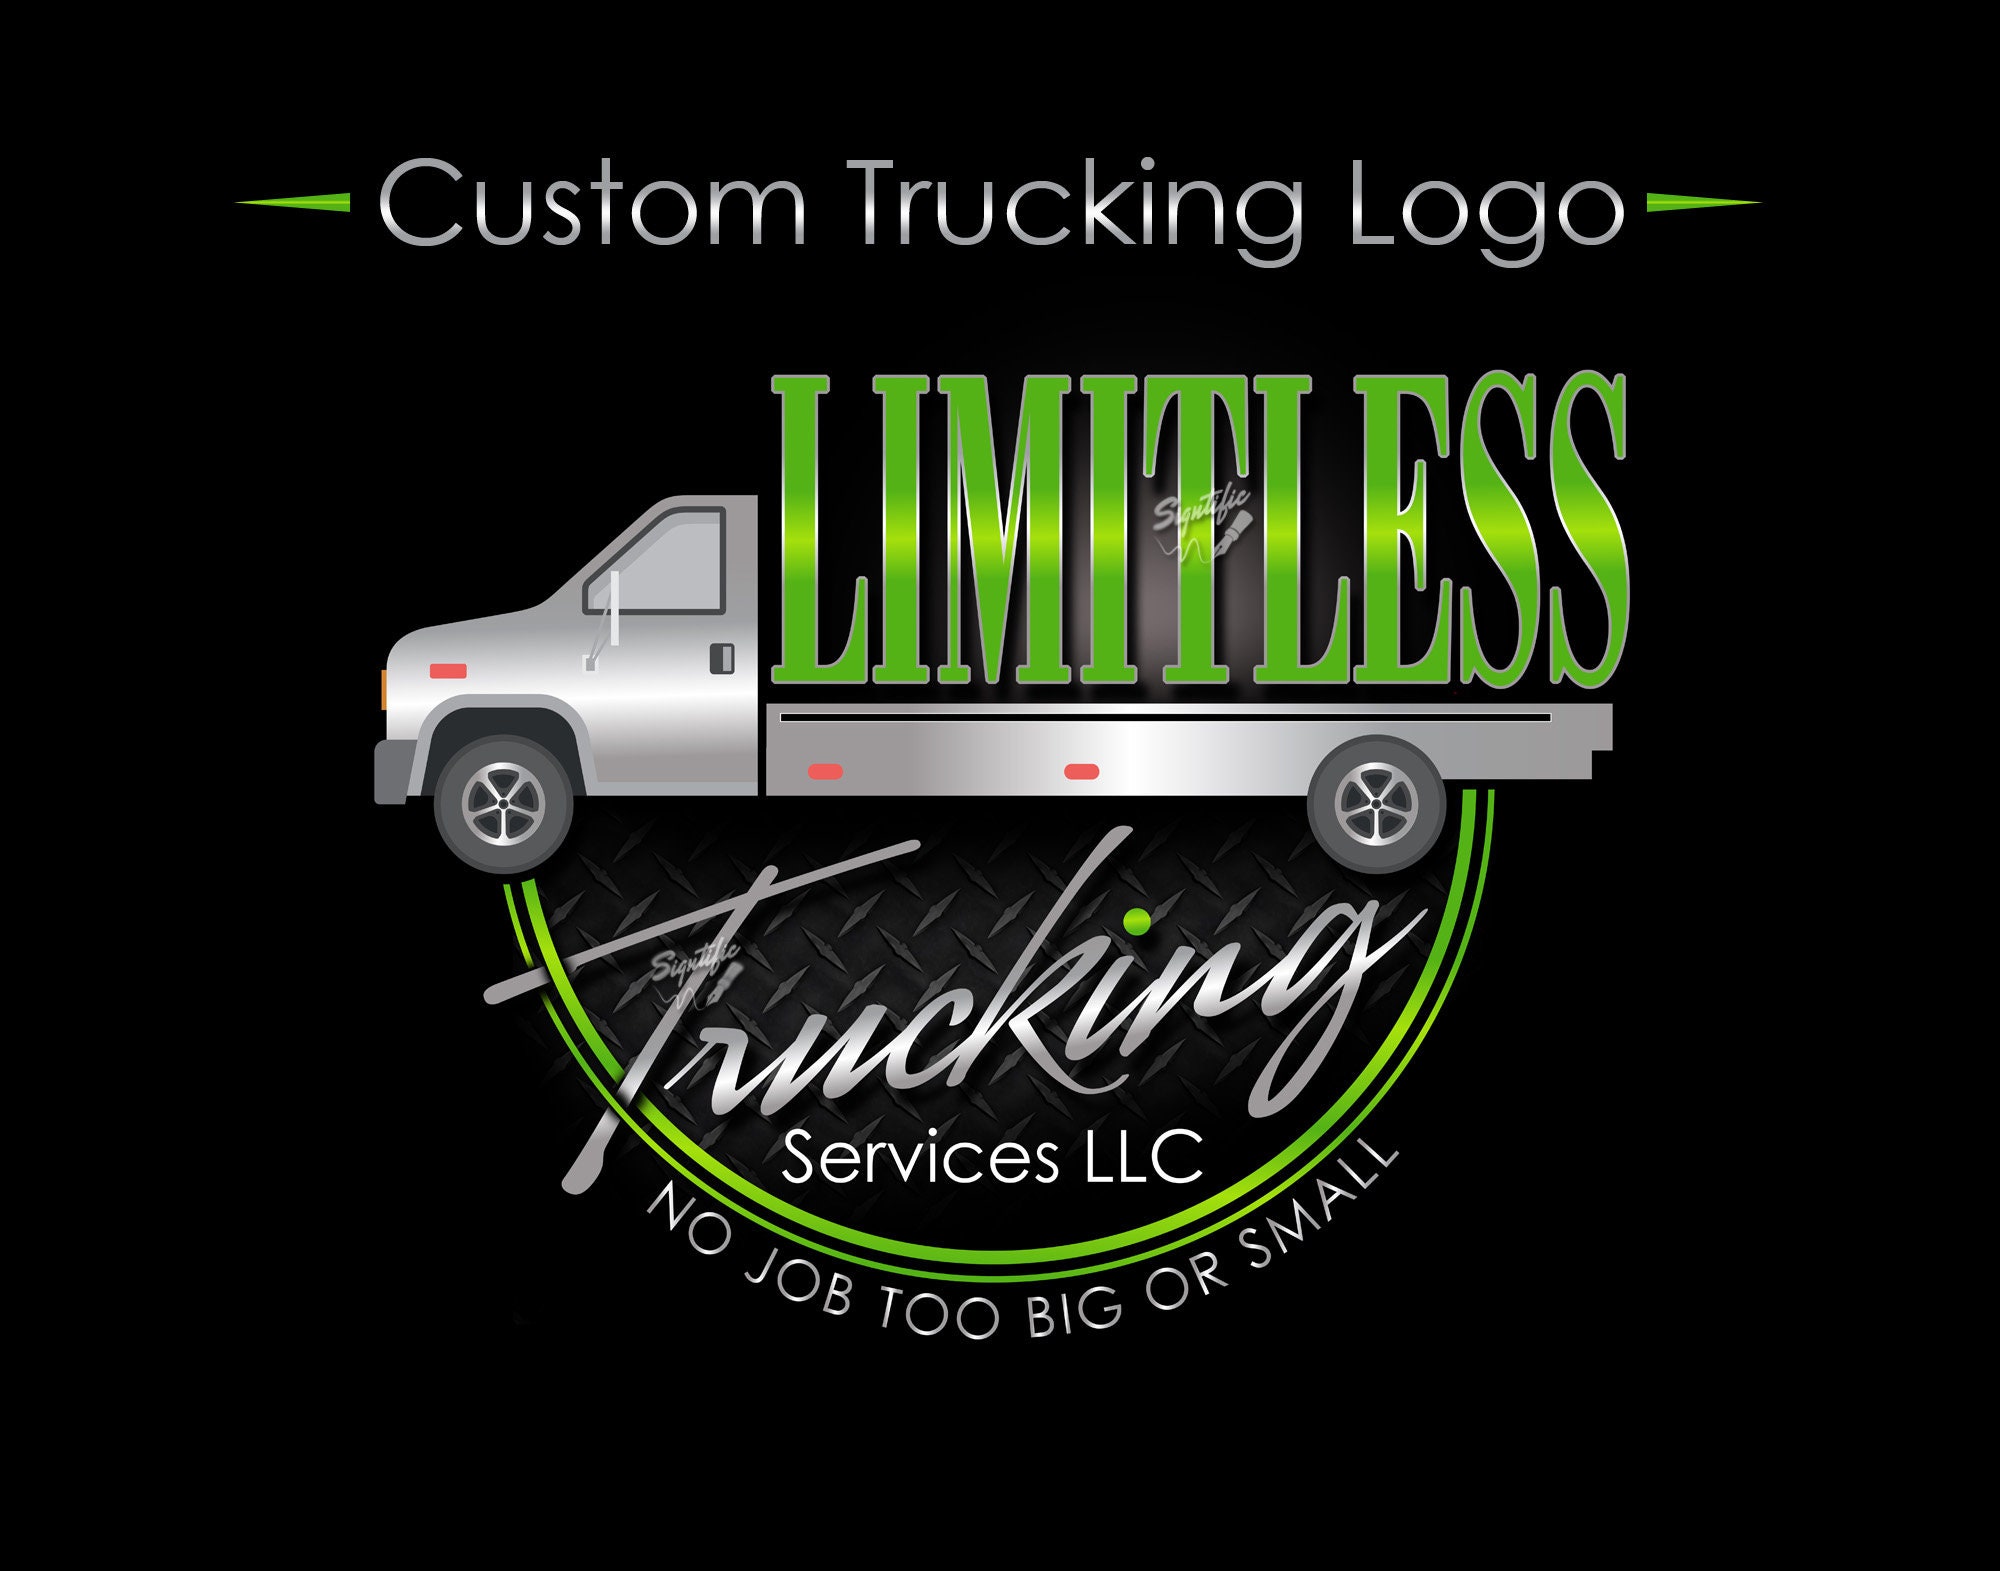 Trucking company logo designs - linkret